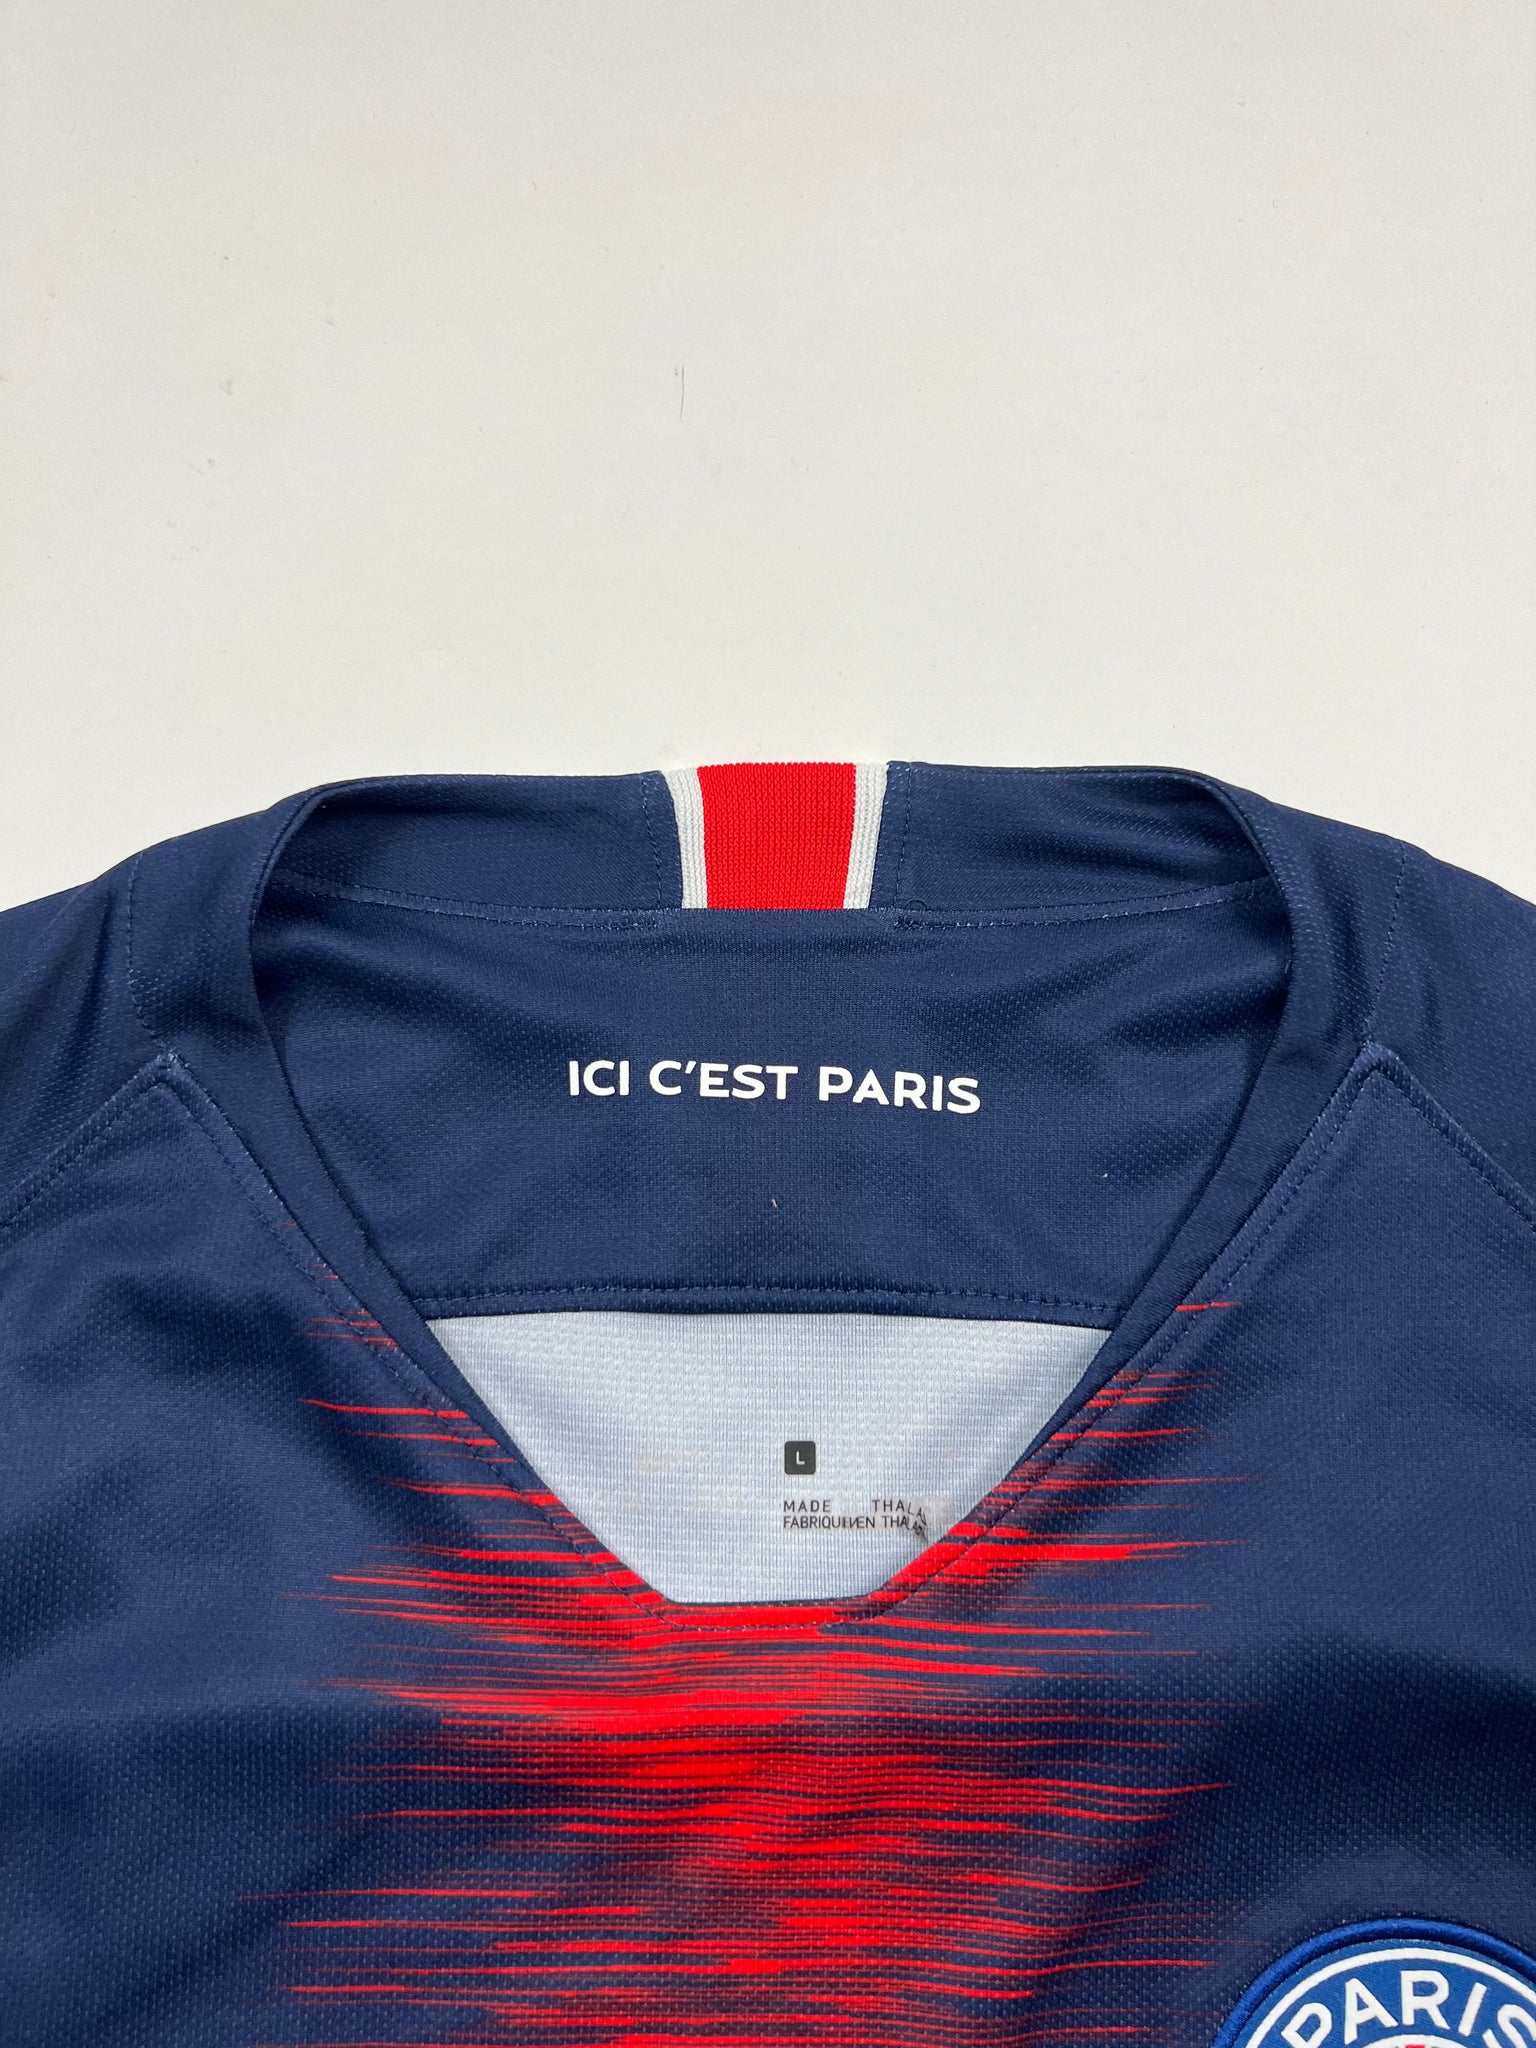 Nike Paris Saint Germain Jersey (L)